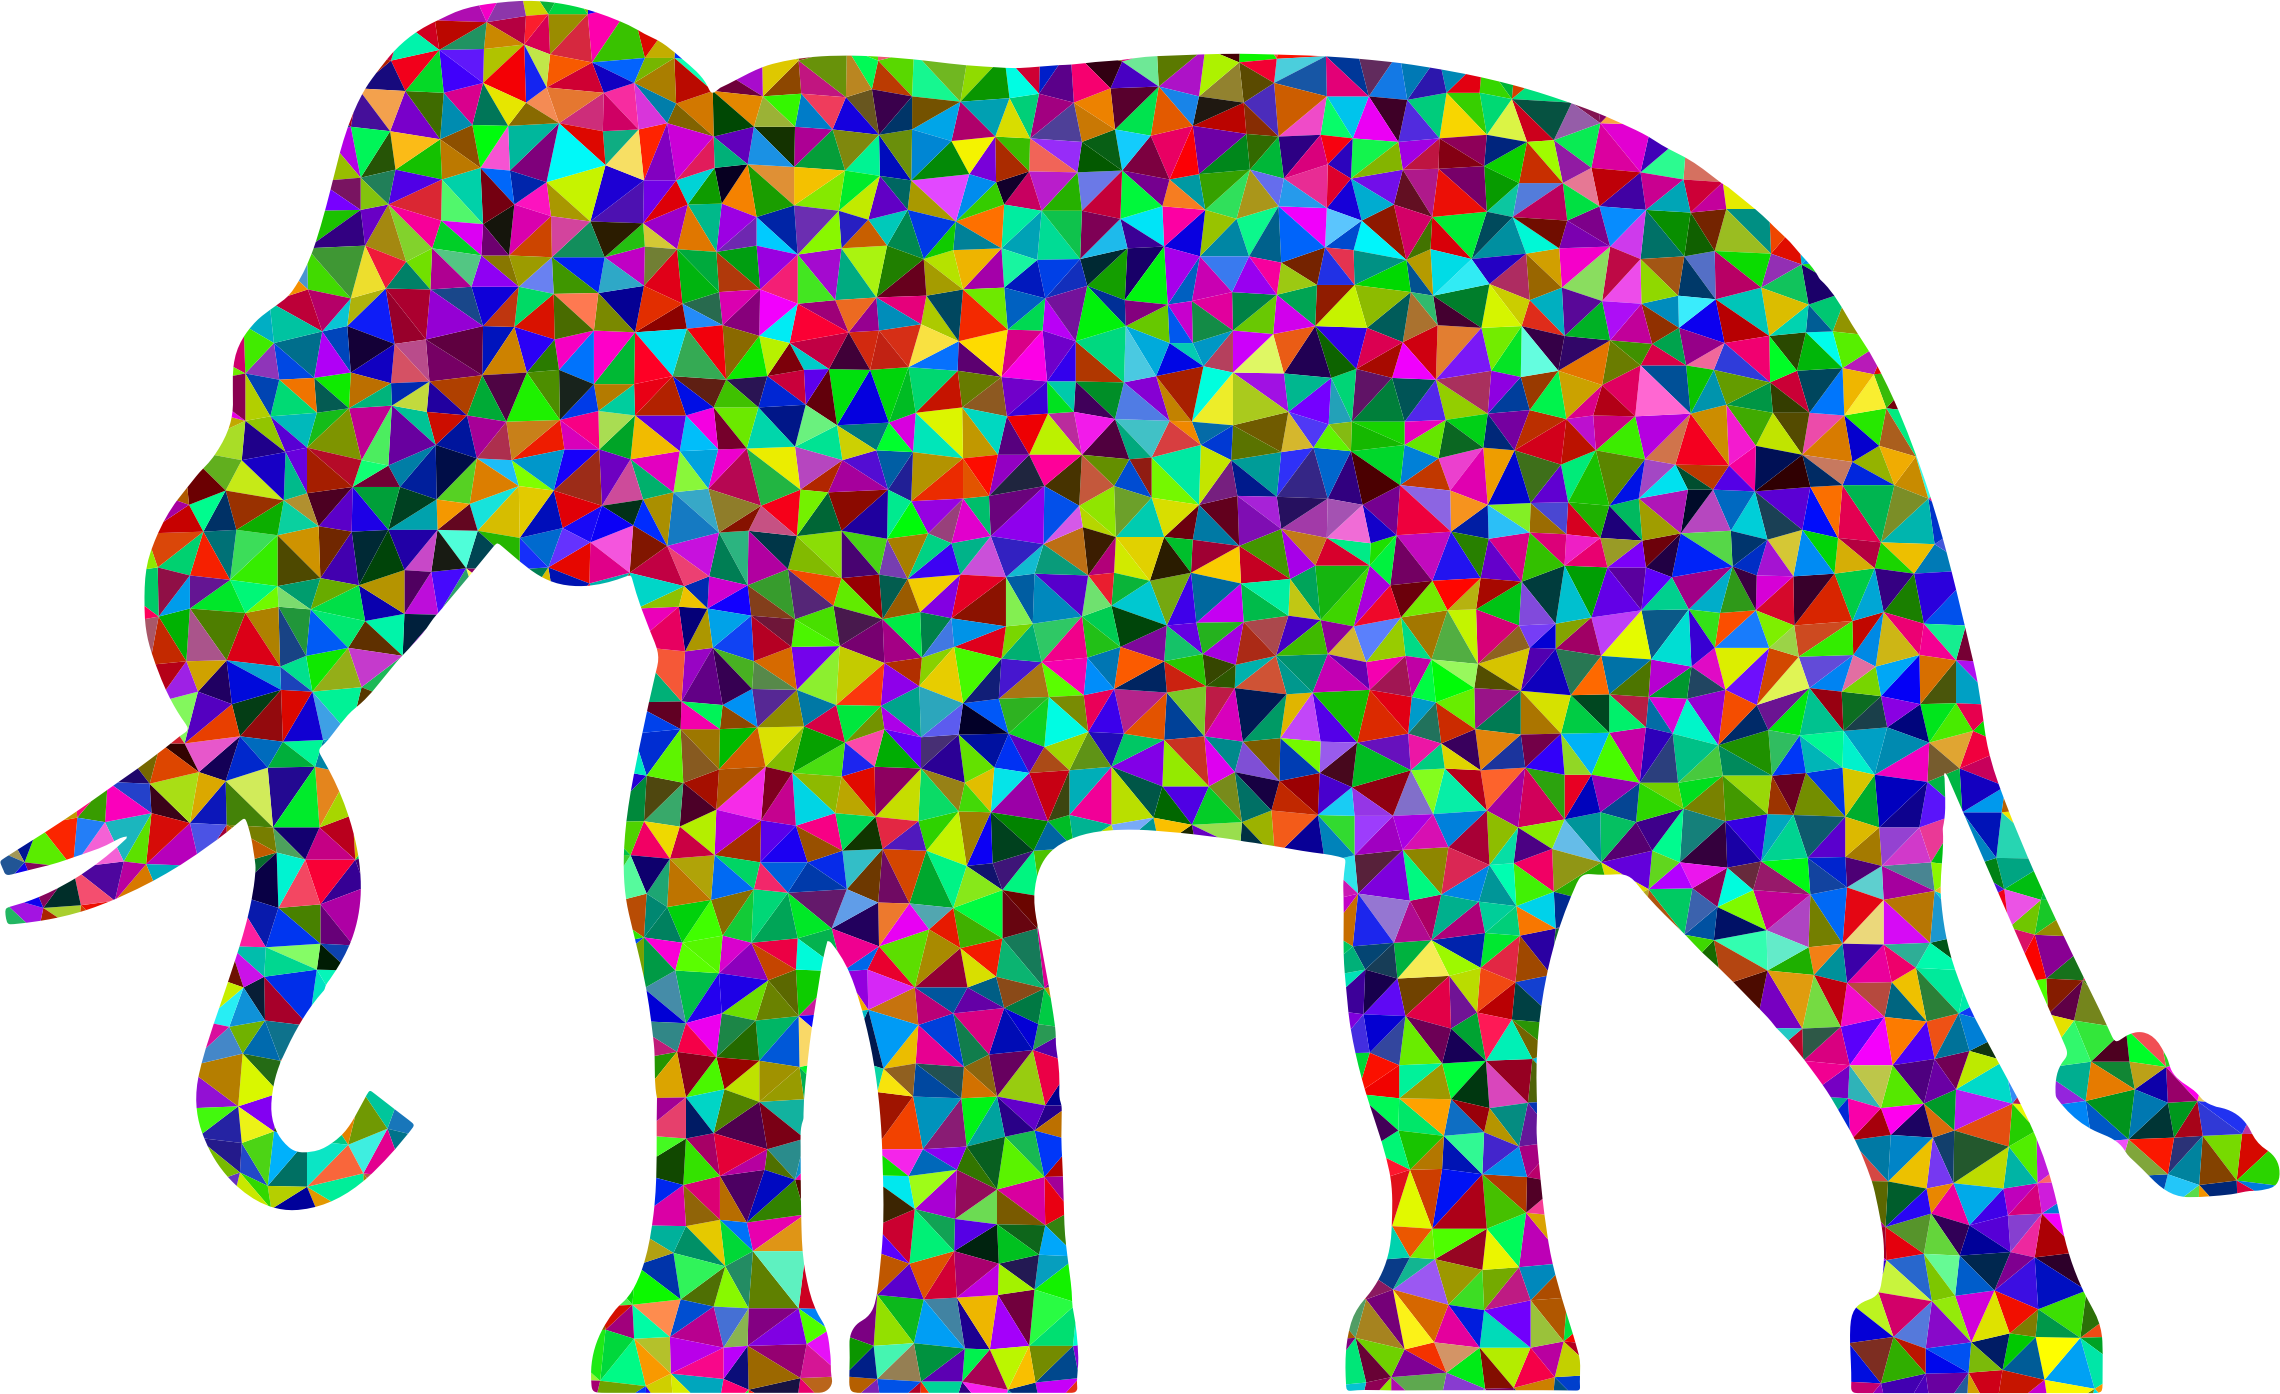 Big Image - Low Polygon Art Elephant (2280x1394)